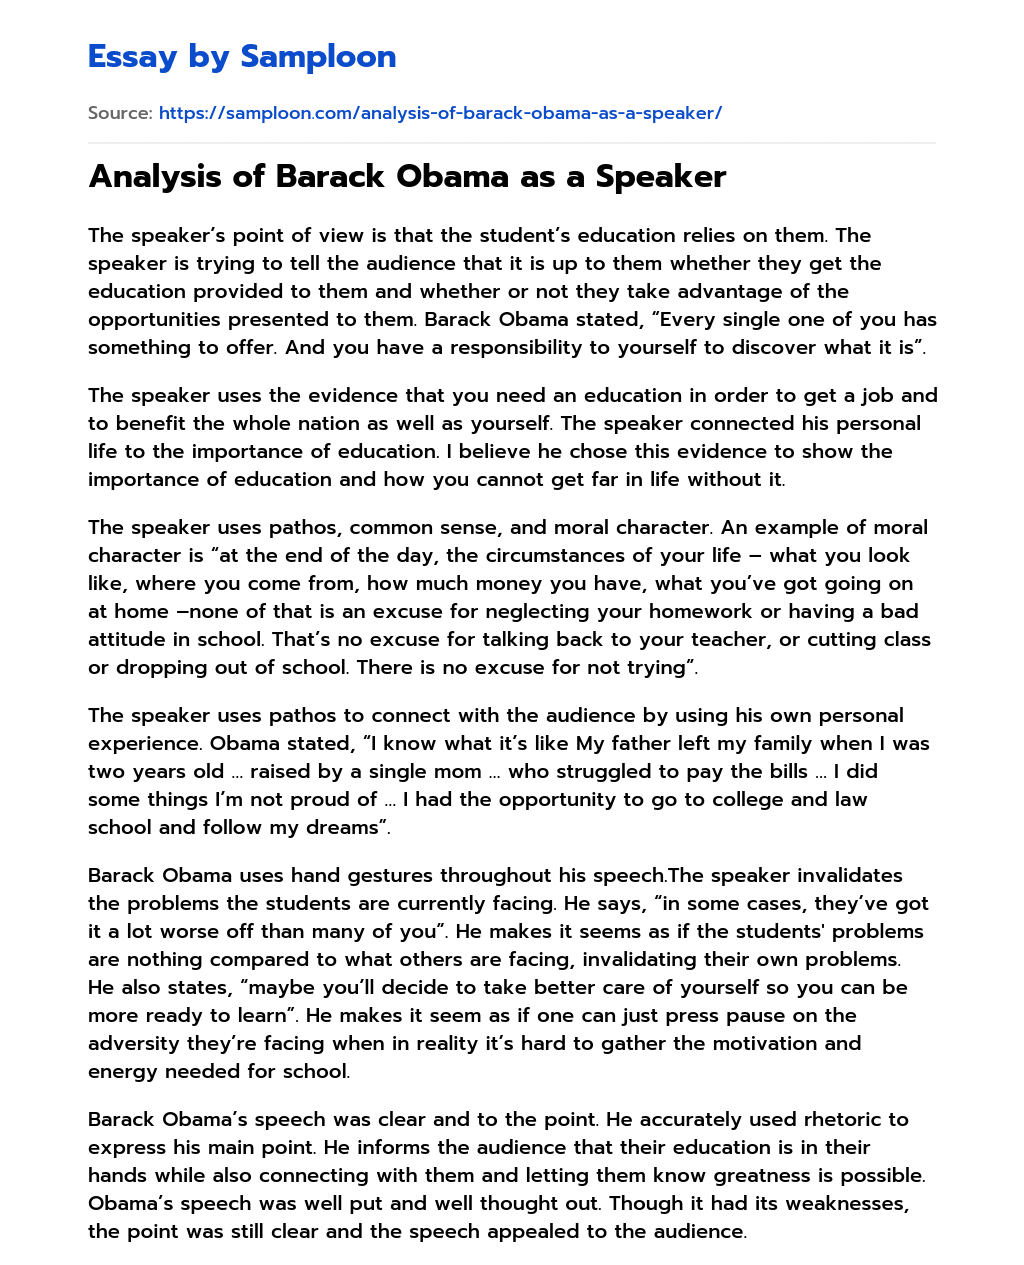 Analysis of Barack Obama as a Speaker essay